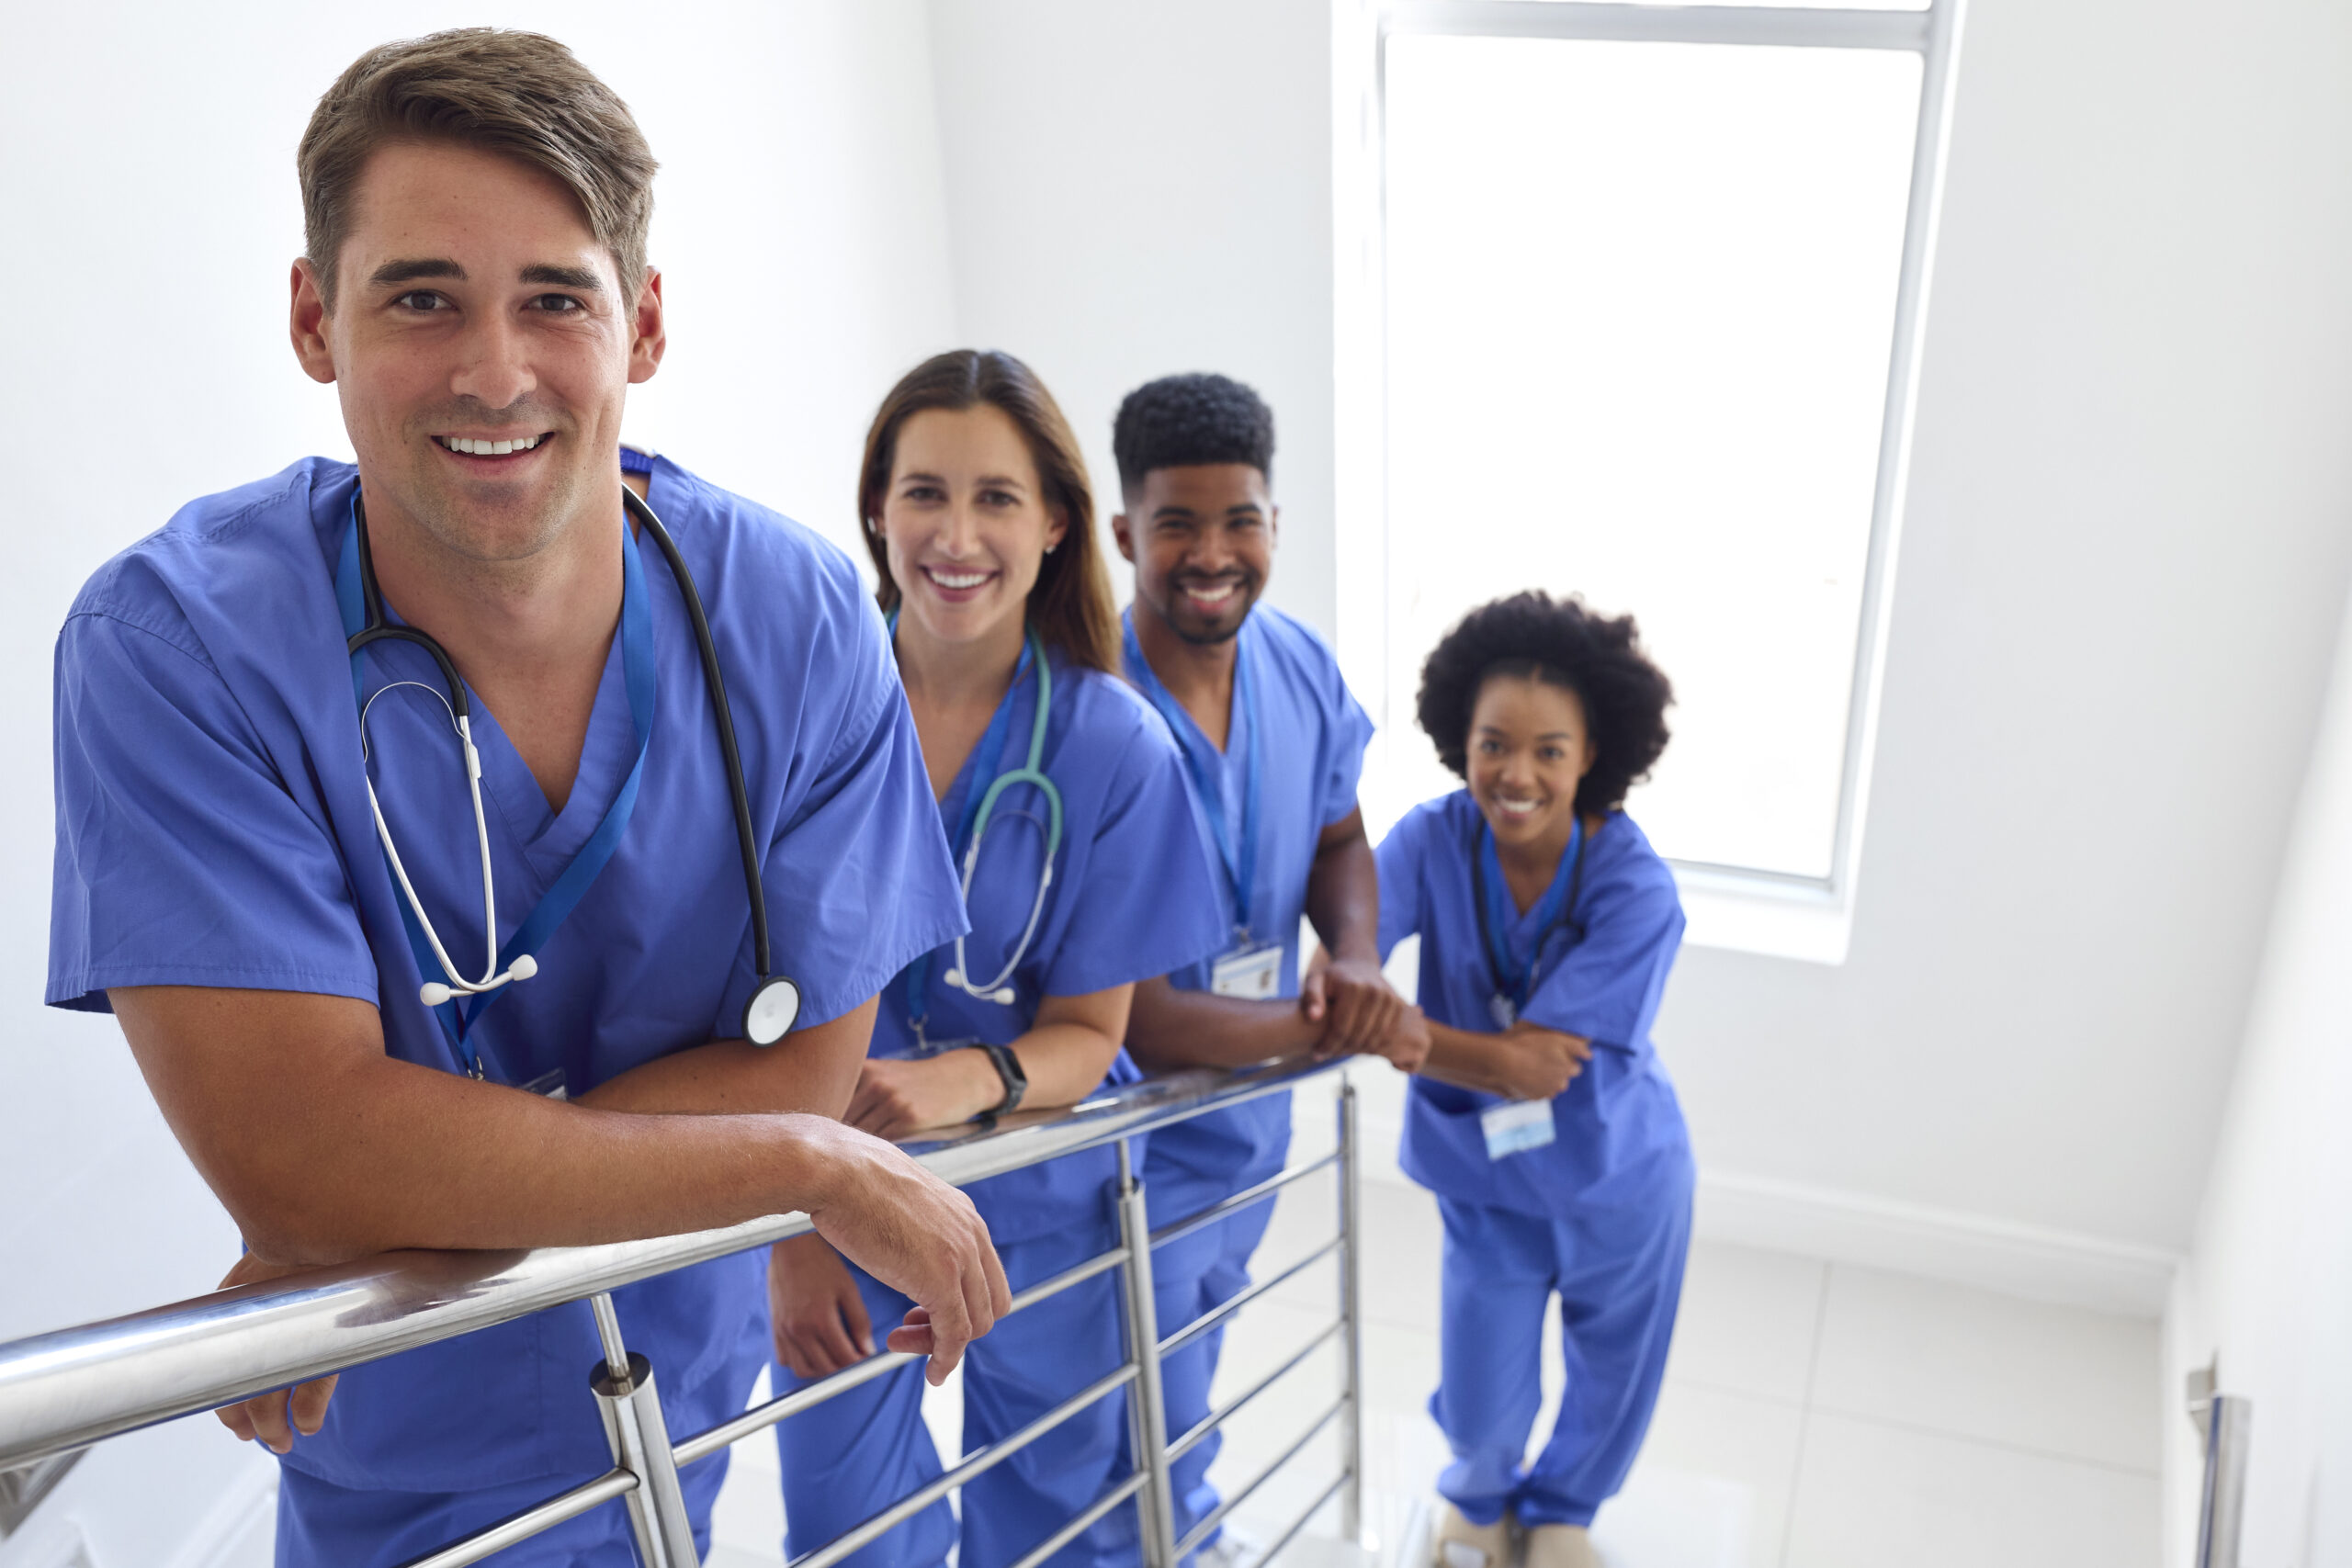 Portrait Of Multi Cultural Medical Team Wearing Scrubs Standing